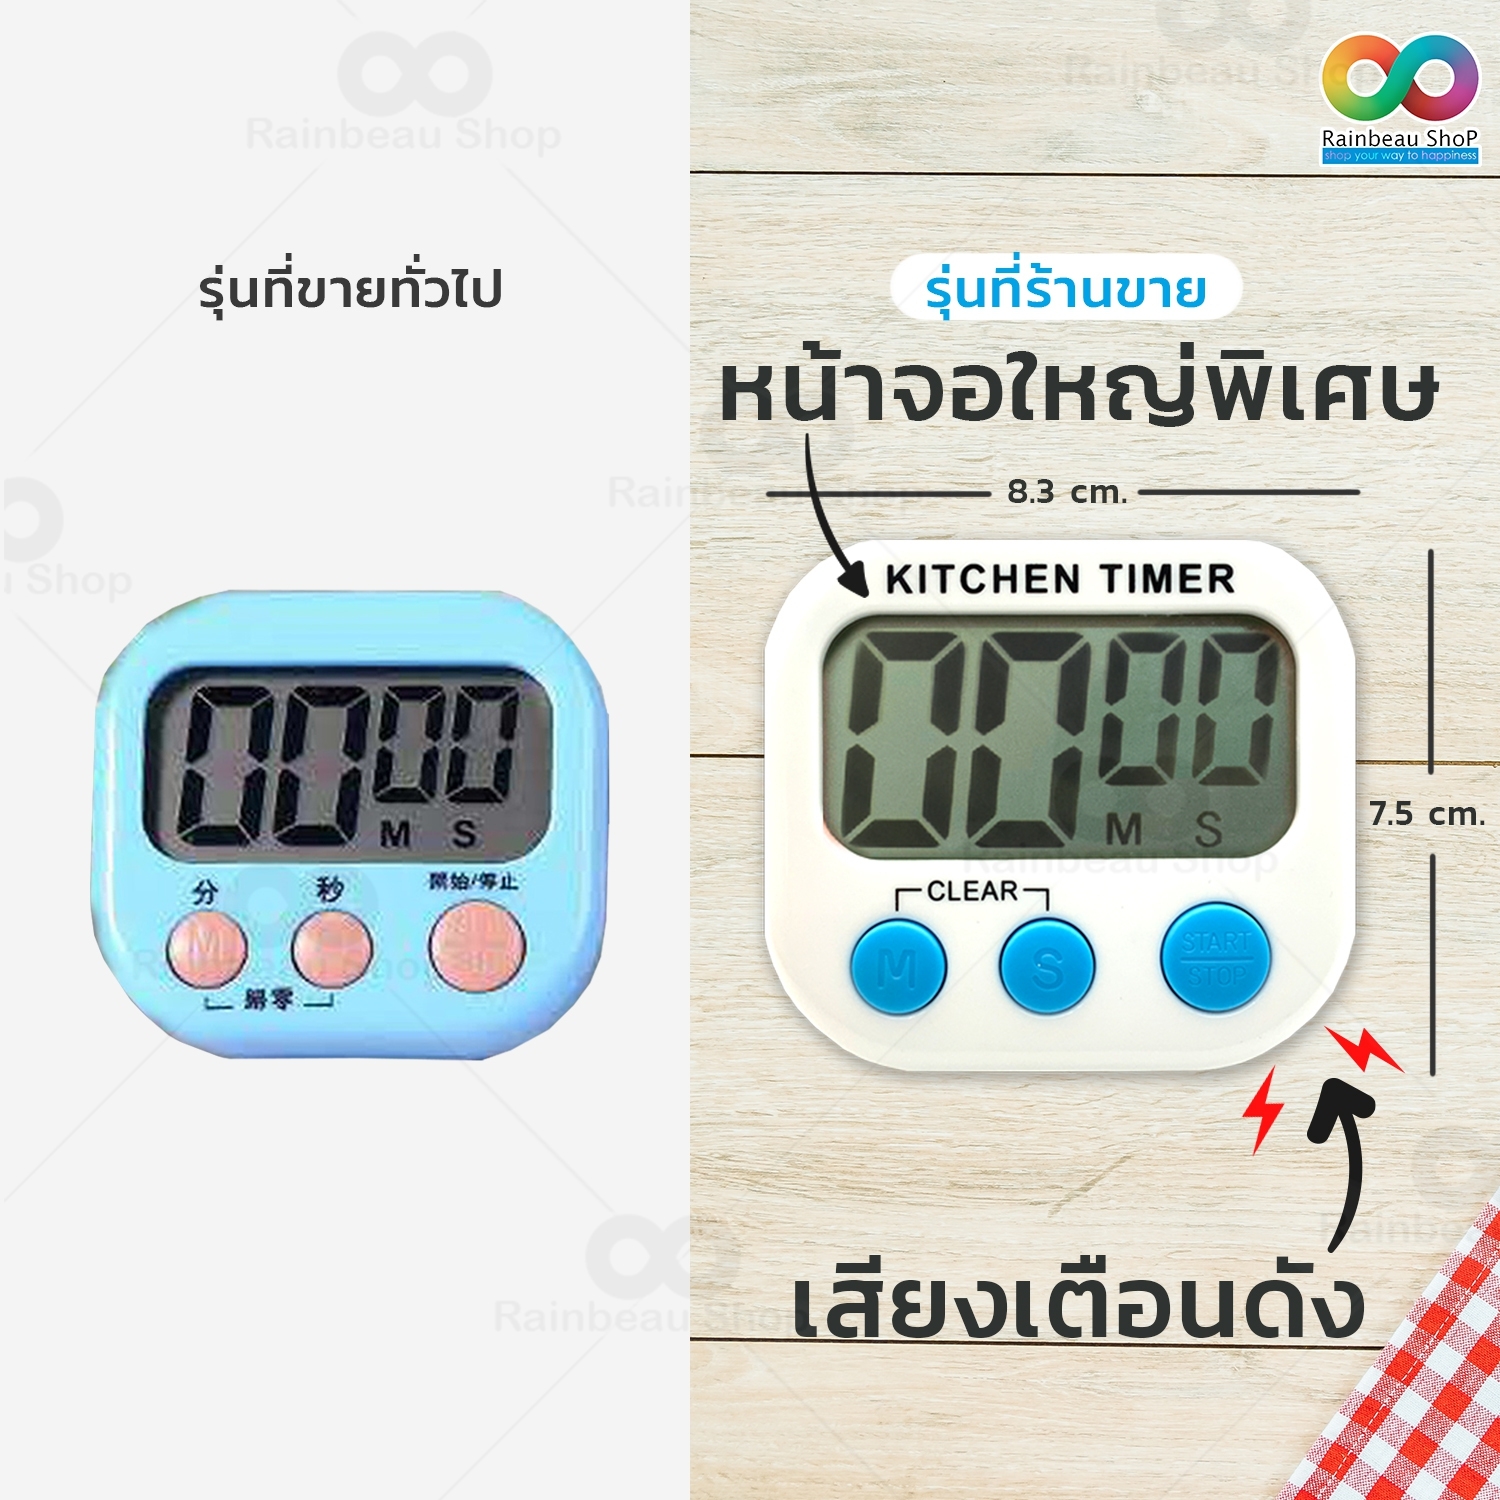 RAINBEAU นาฬิกาจับเวลา นาฬิกาตั้งเวลาทำอาหาร นาฬิกาจับเวลาในครัว นาฬิกาจับเวลาทำอาหาร นาฬิกจับเวลาเดินหน้าถอยหลัง นาฬิกาจับเวลาอ่านหนังสือ นาฬิกาจับเวลาเกาหลี Kitchen Cooking Timer หน้าจอใหญ่ เสียงเตือนดัง ใช้งานง่าย